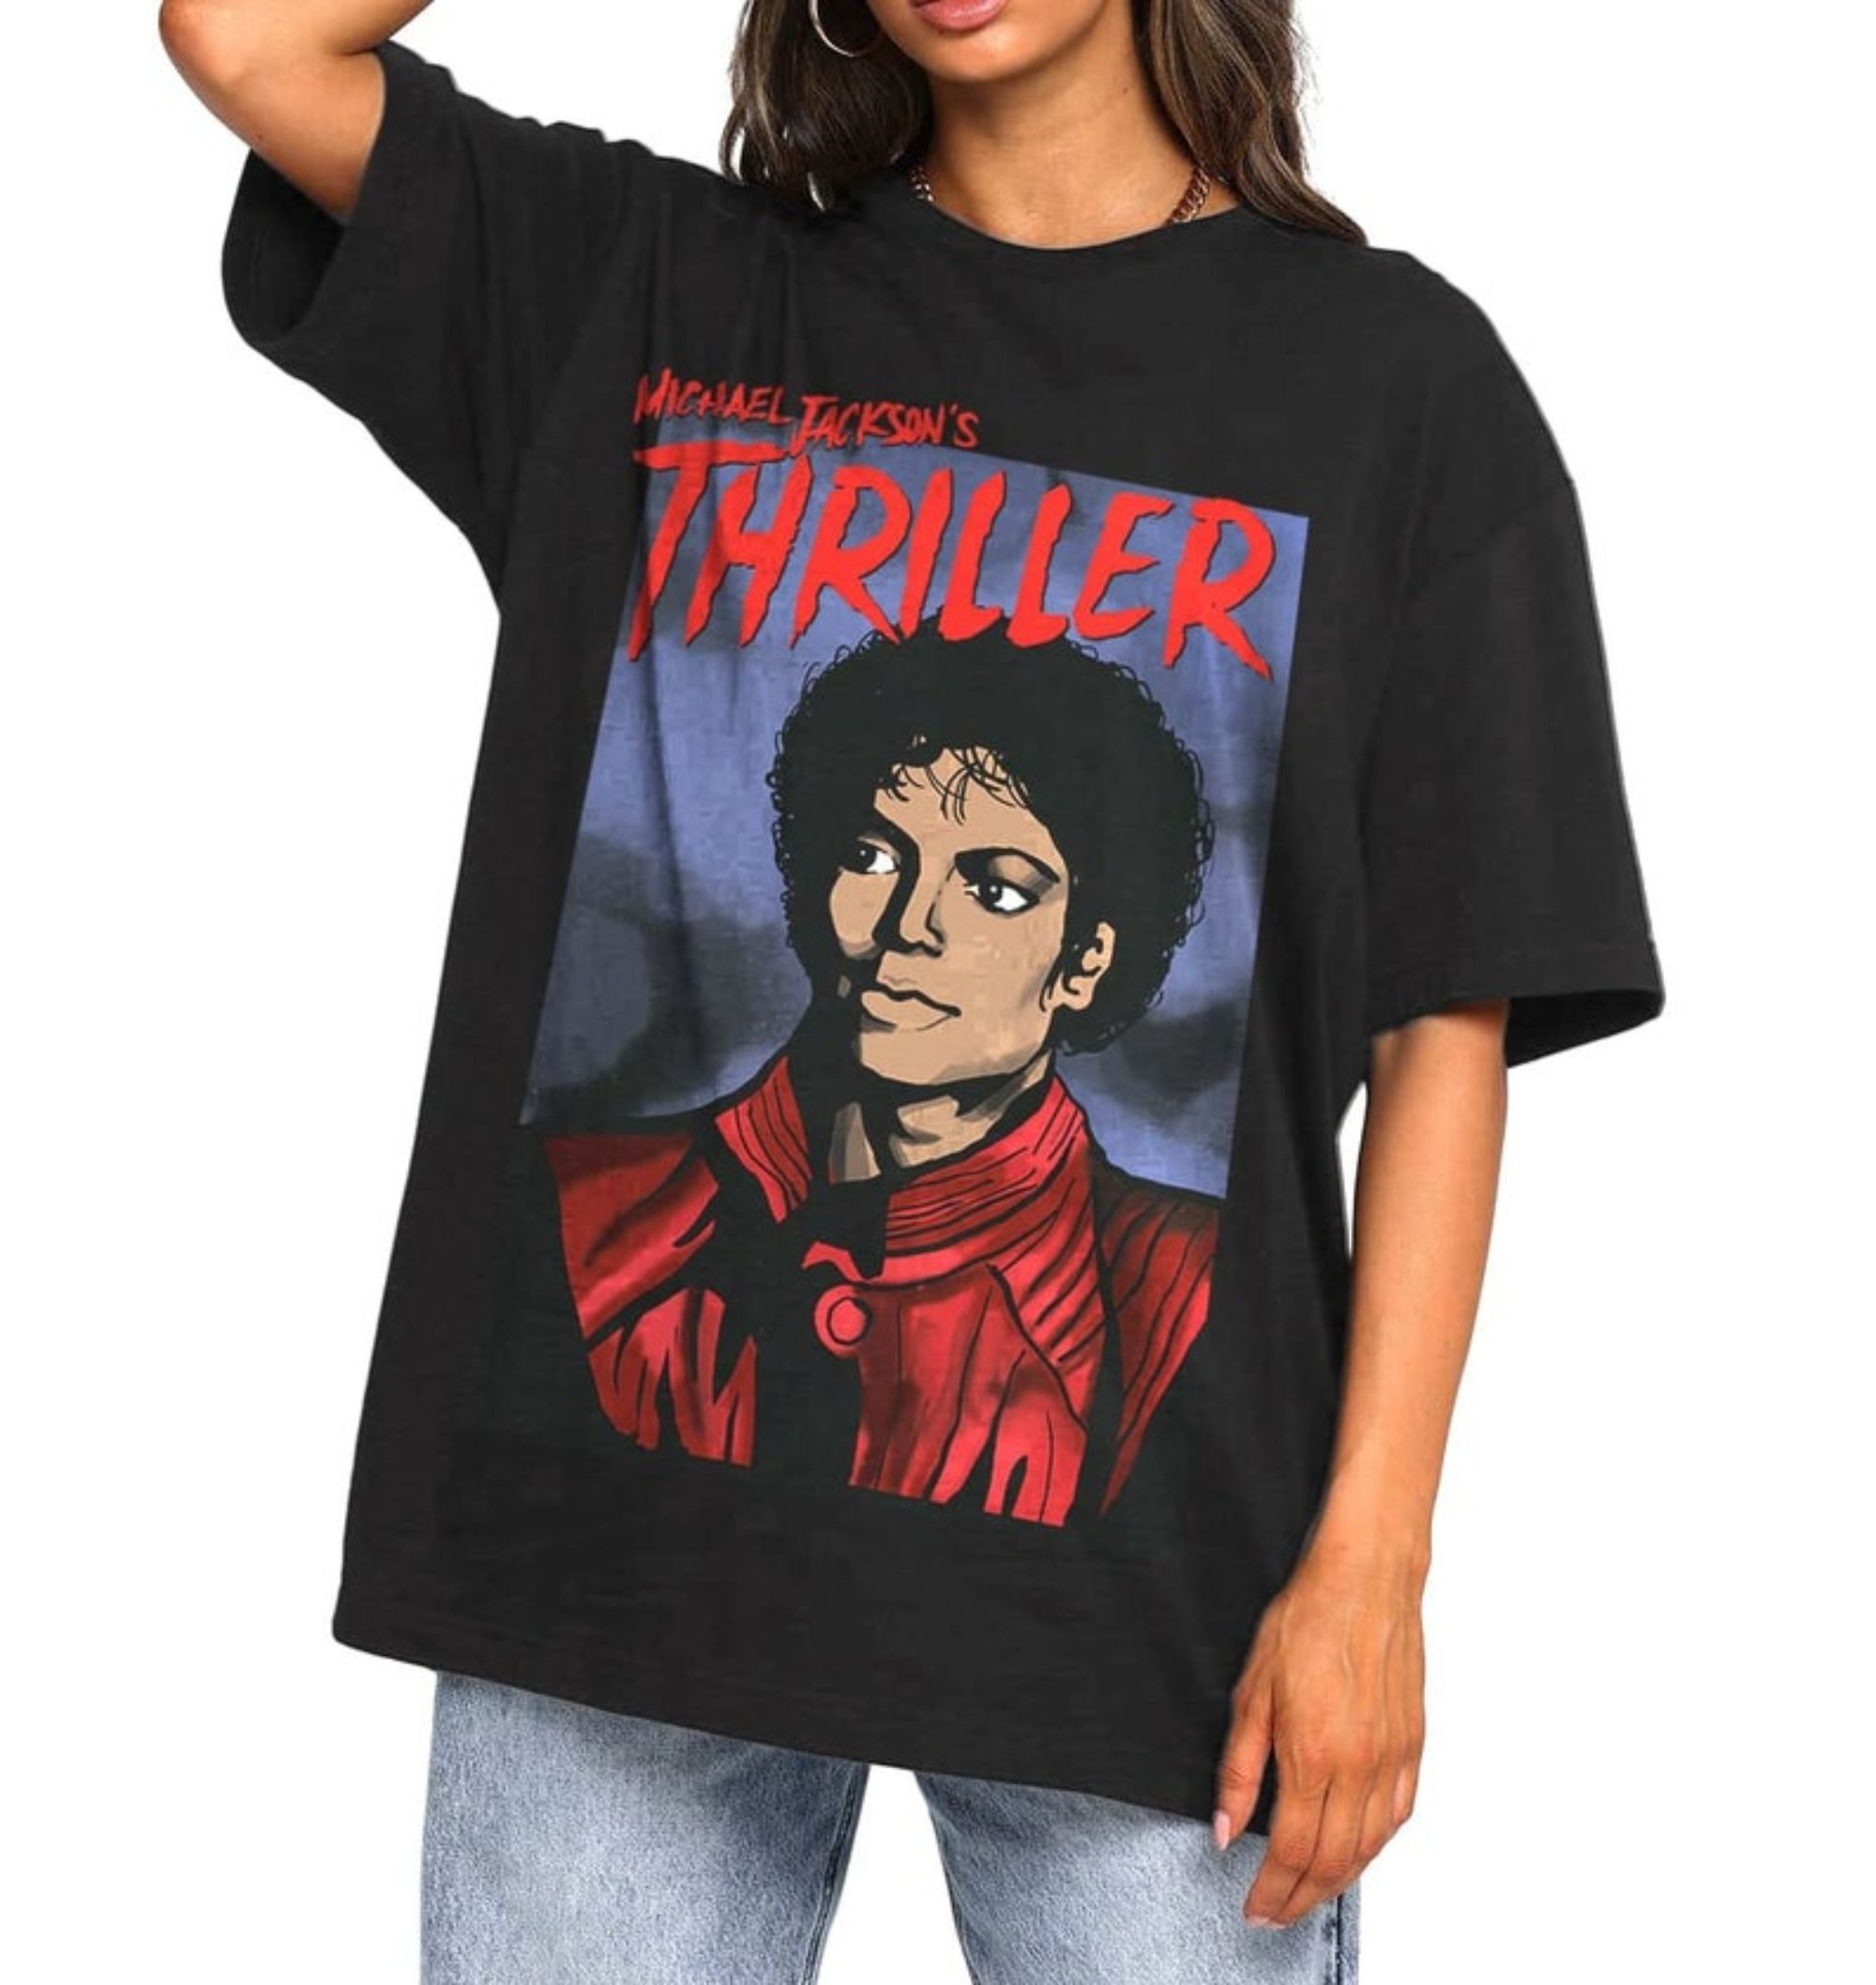 King Of Pop Michael Jackson shirt, Michael Jackson Thriller Shirt, Vintage  Pop Shirt, American Songwriter, 80s Music Shirt, POP Shirt